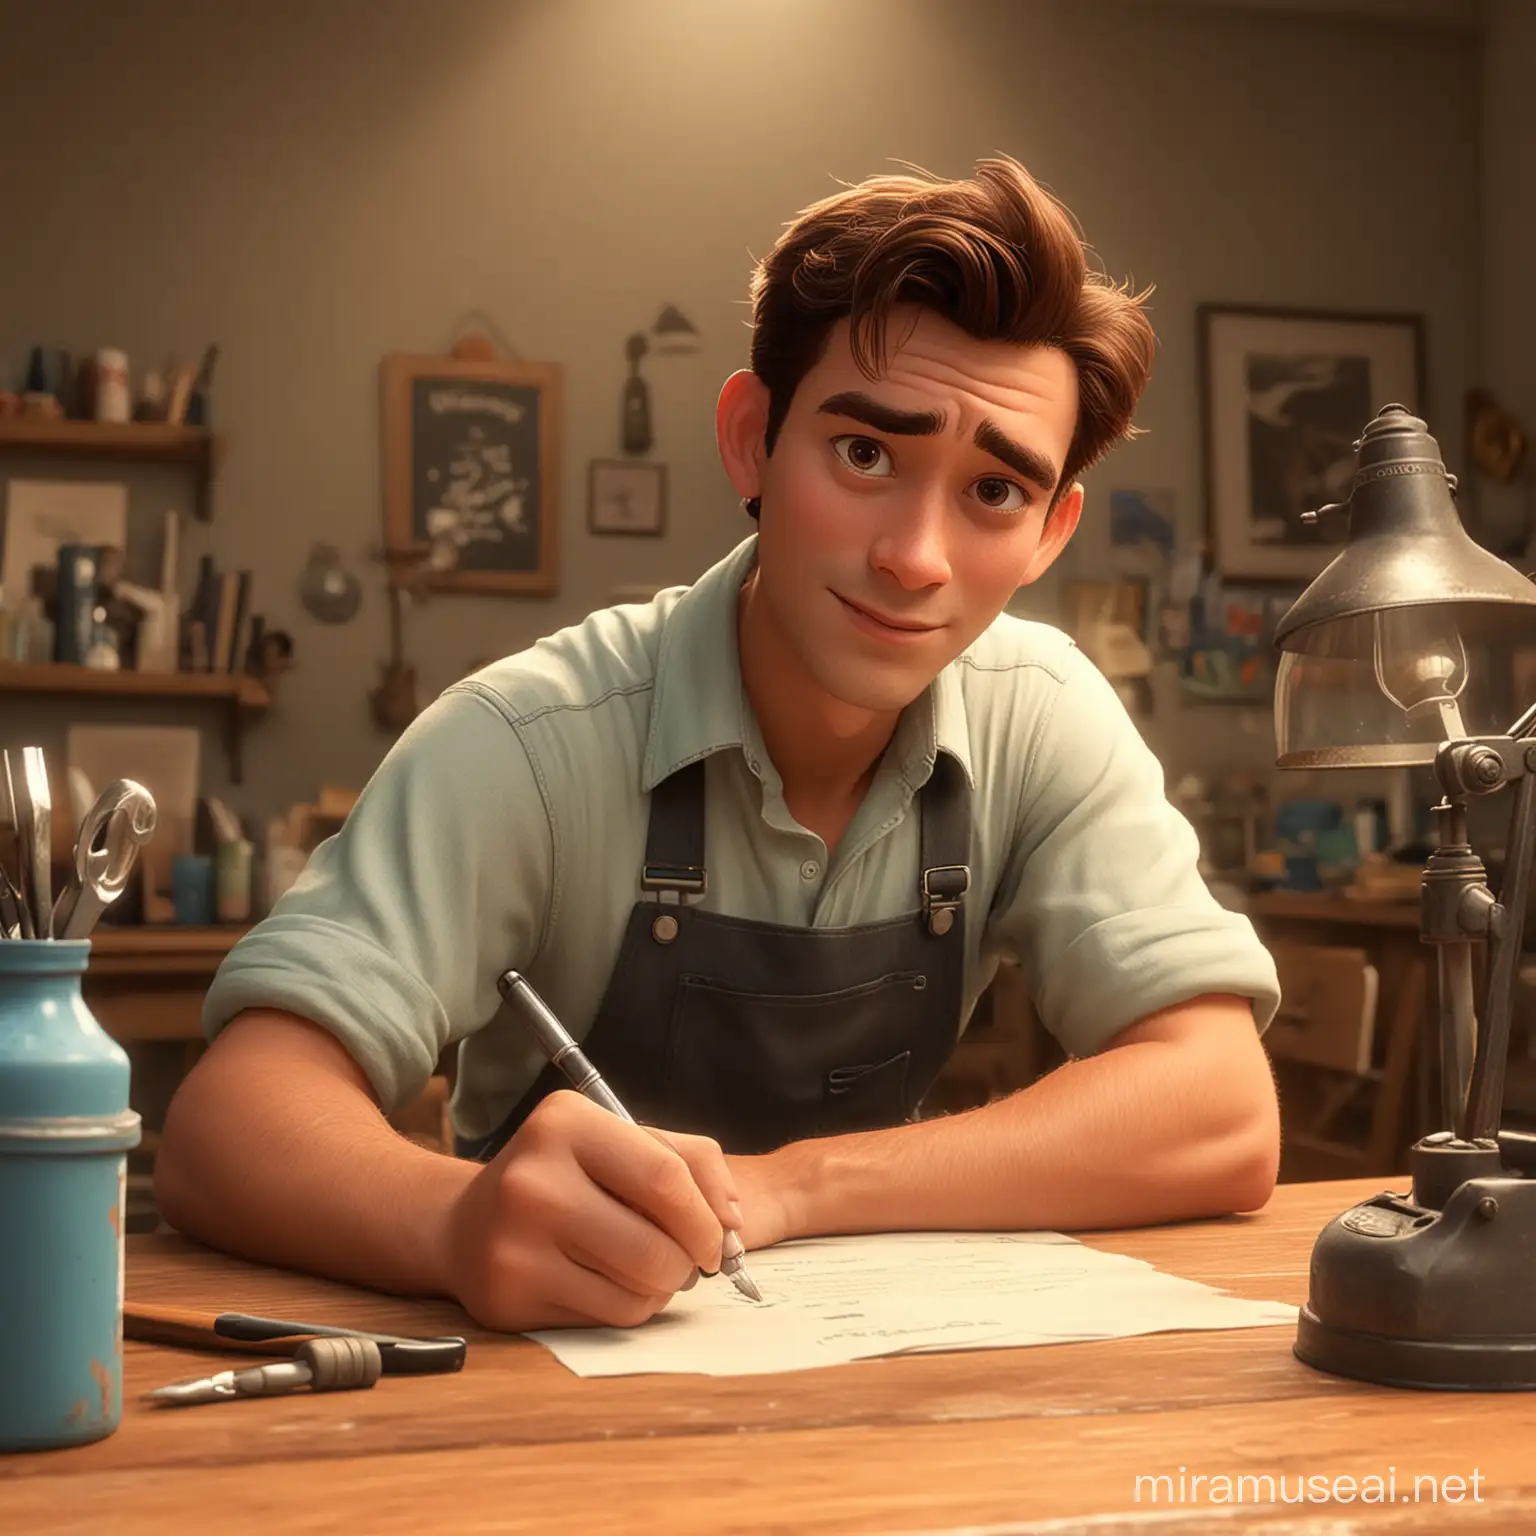 Hardworking Professional in Animated Disney Pixar Style